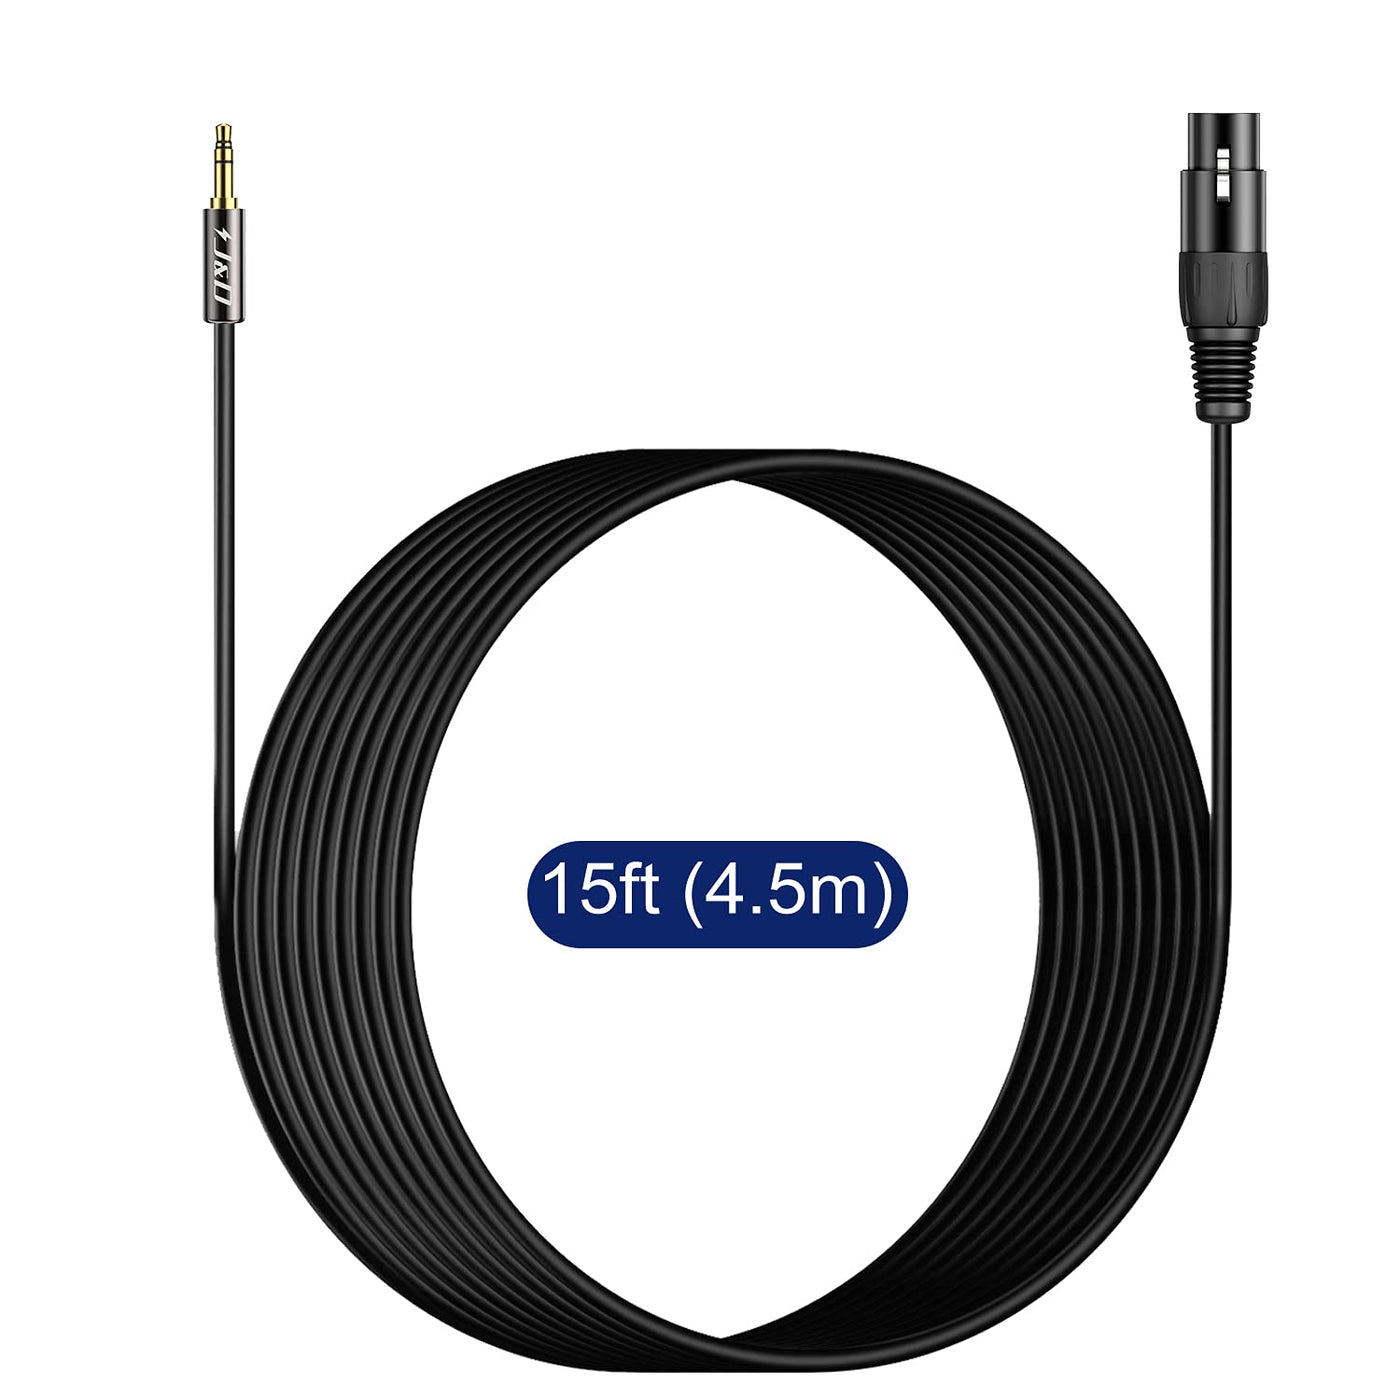  J&D XLR to 3.5mm Microphone Cable, PVC Shelled XLR